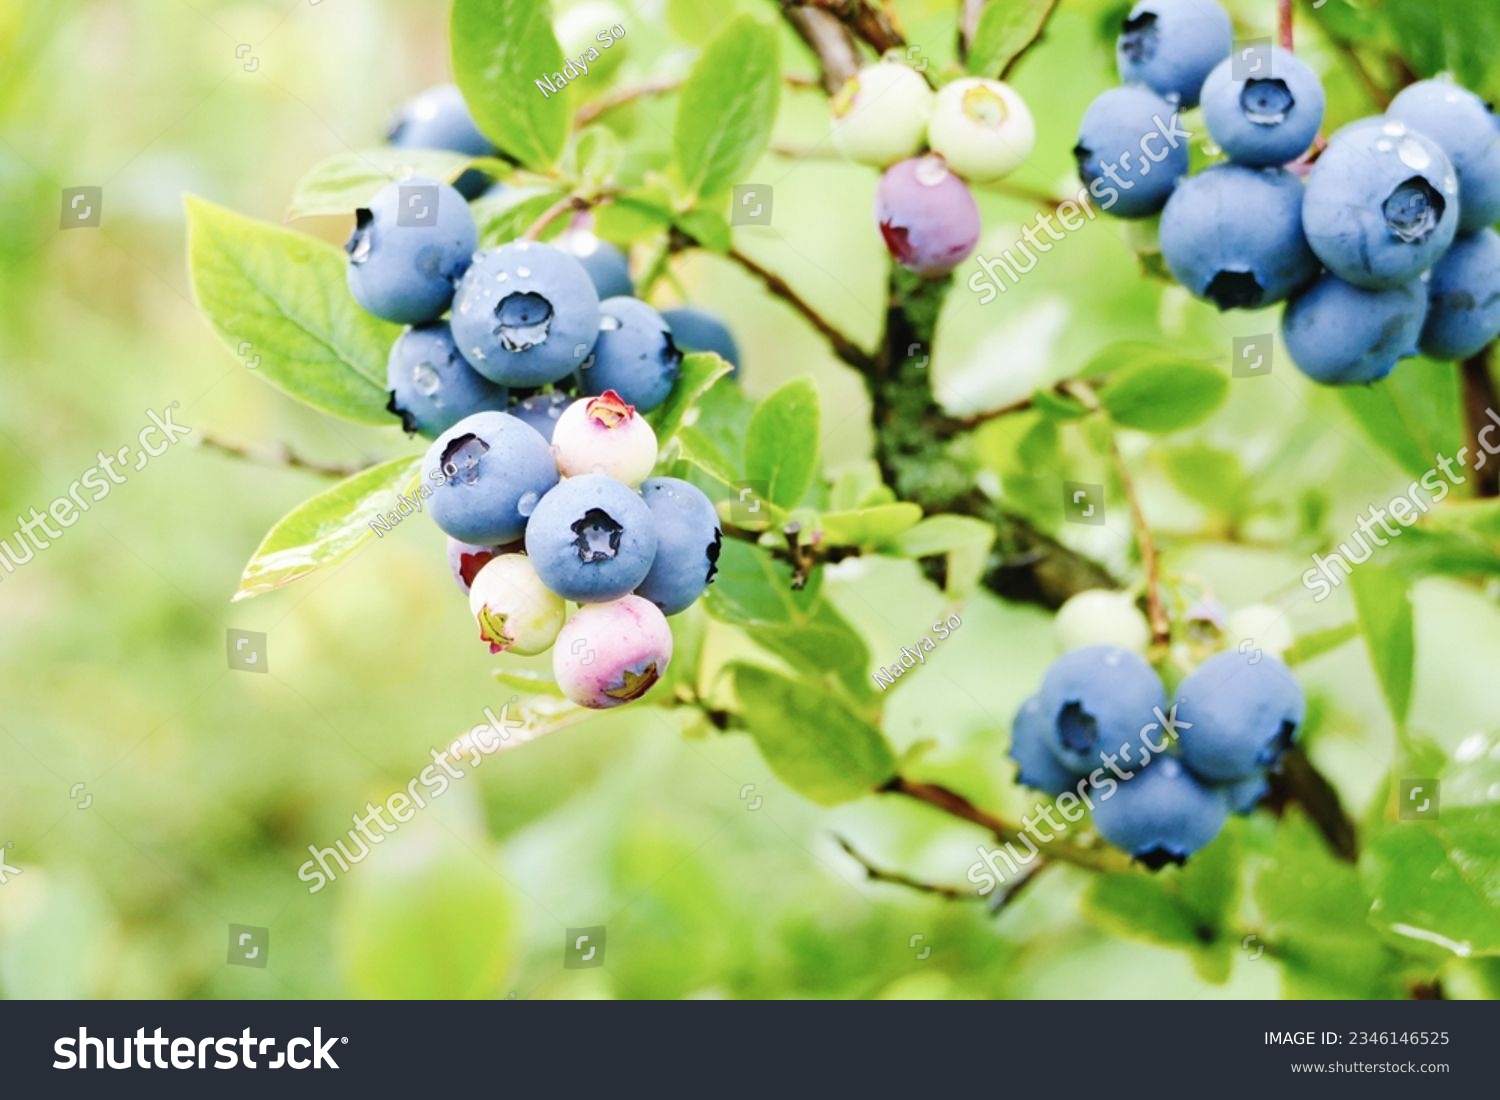 Vaccinium corymbosum blue huckleberry bush ripening berries blueberry plant in garden vertical shot #2346146525